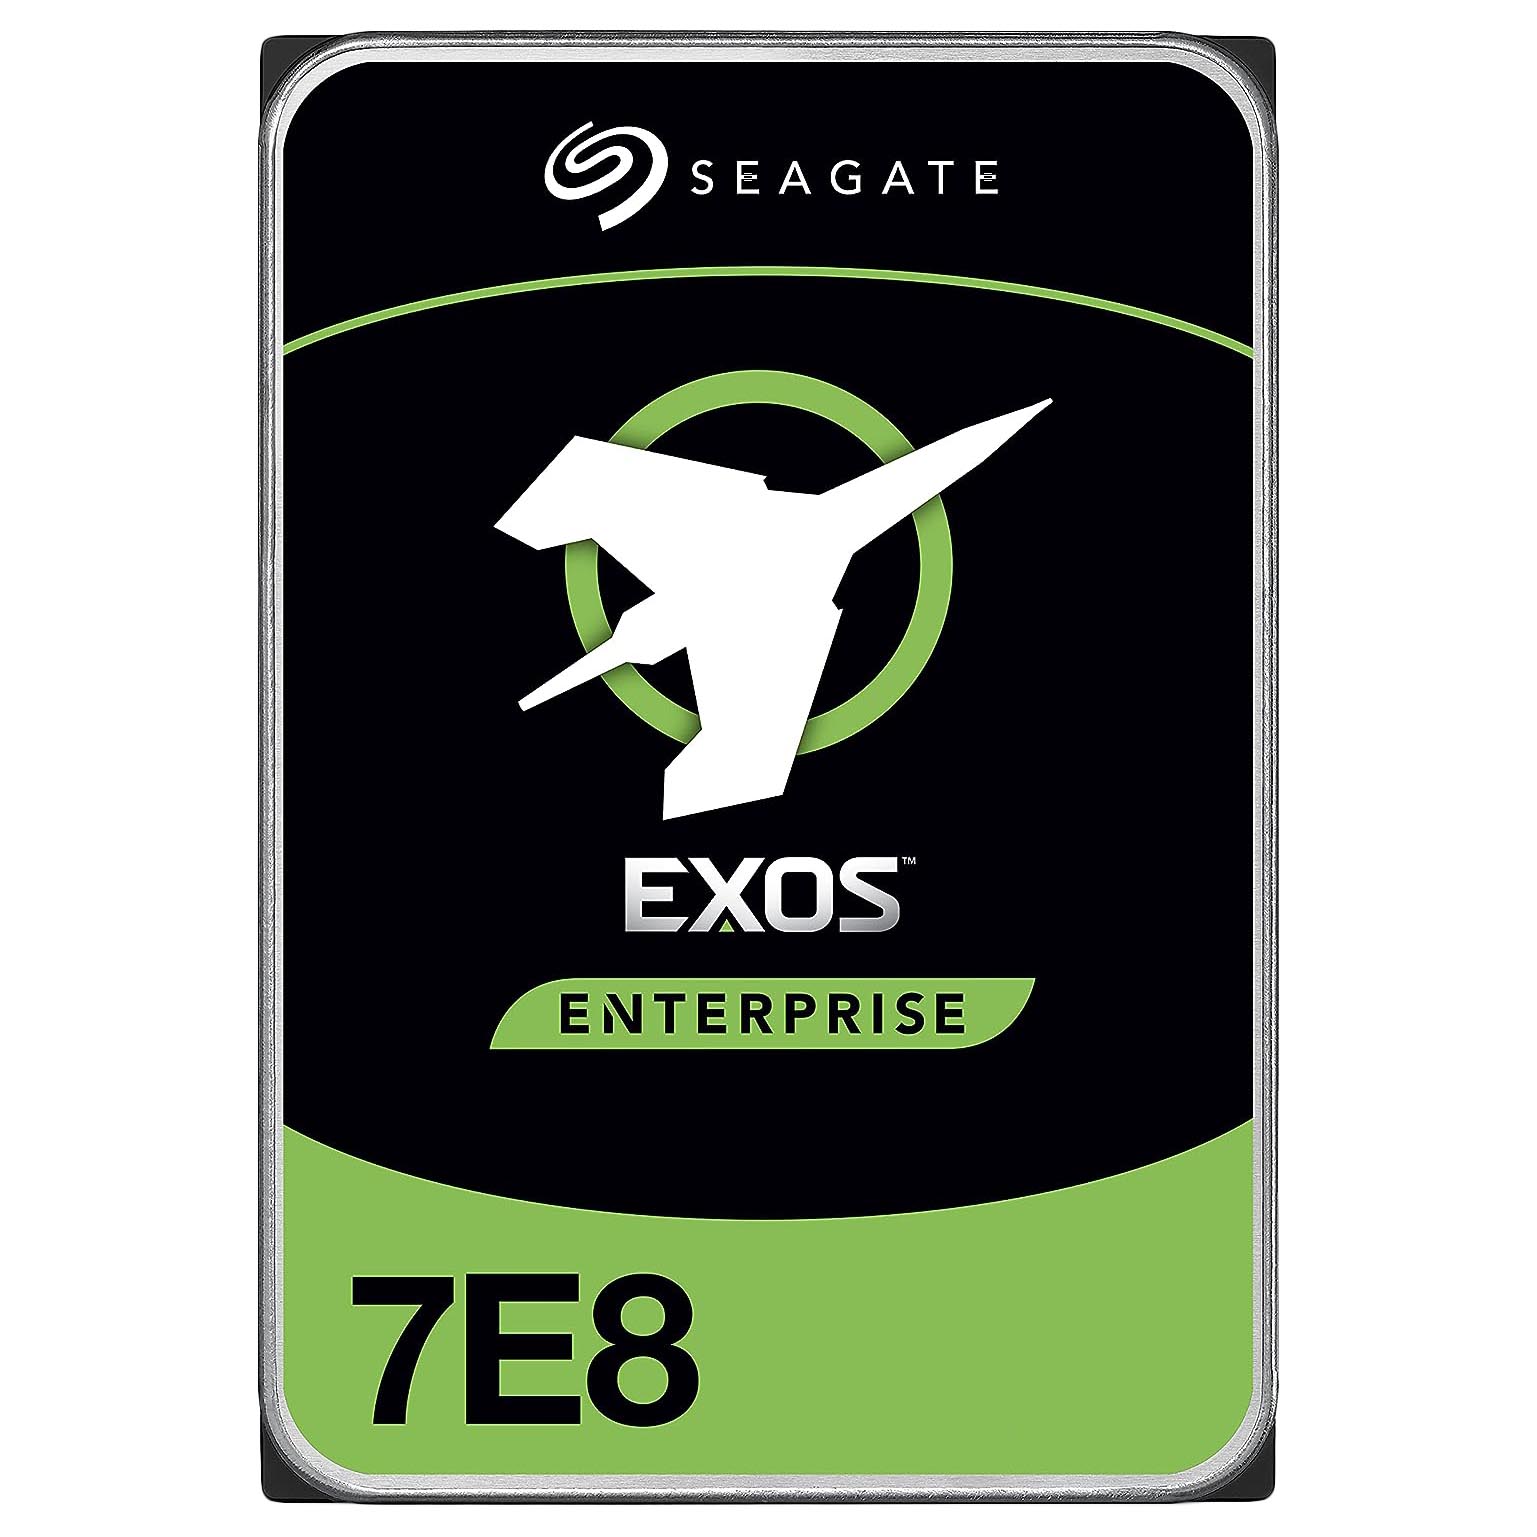 Внутренний жесткий диск Seagate Exos 7E8 512E, ST4000NM0125, 4 Тб внутренний жесткий диск seagate exos 7e8 512e st8000nm0075 8 тб